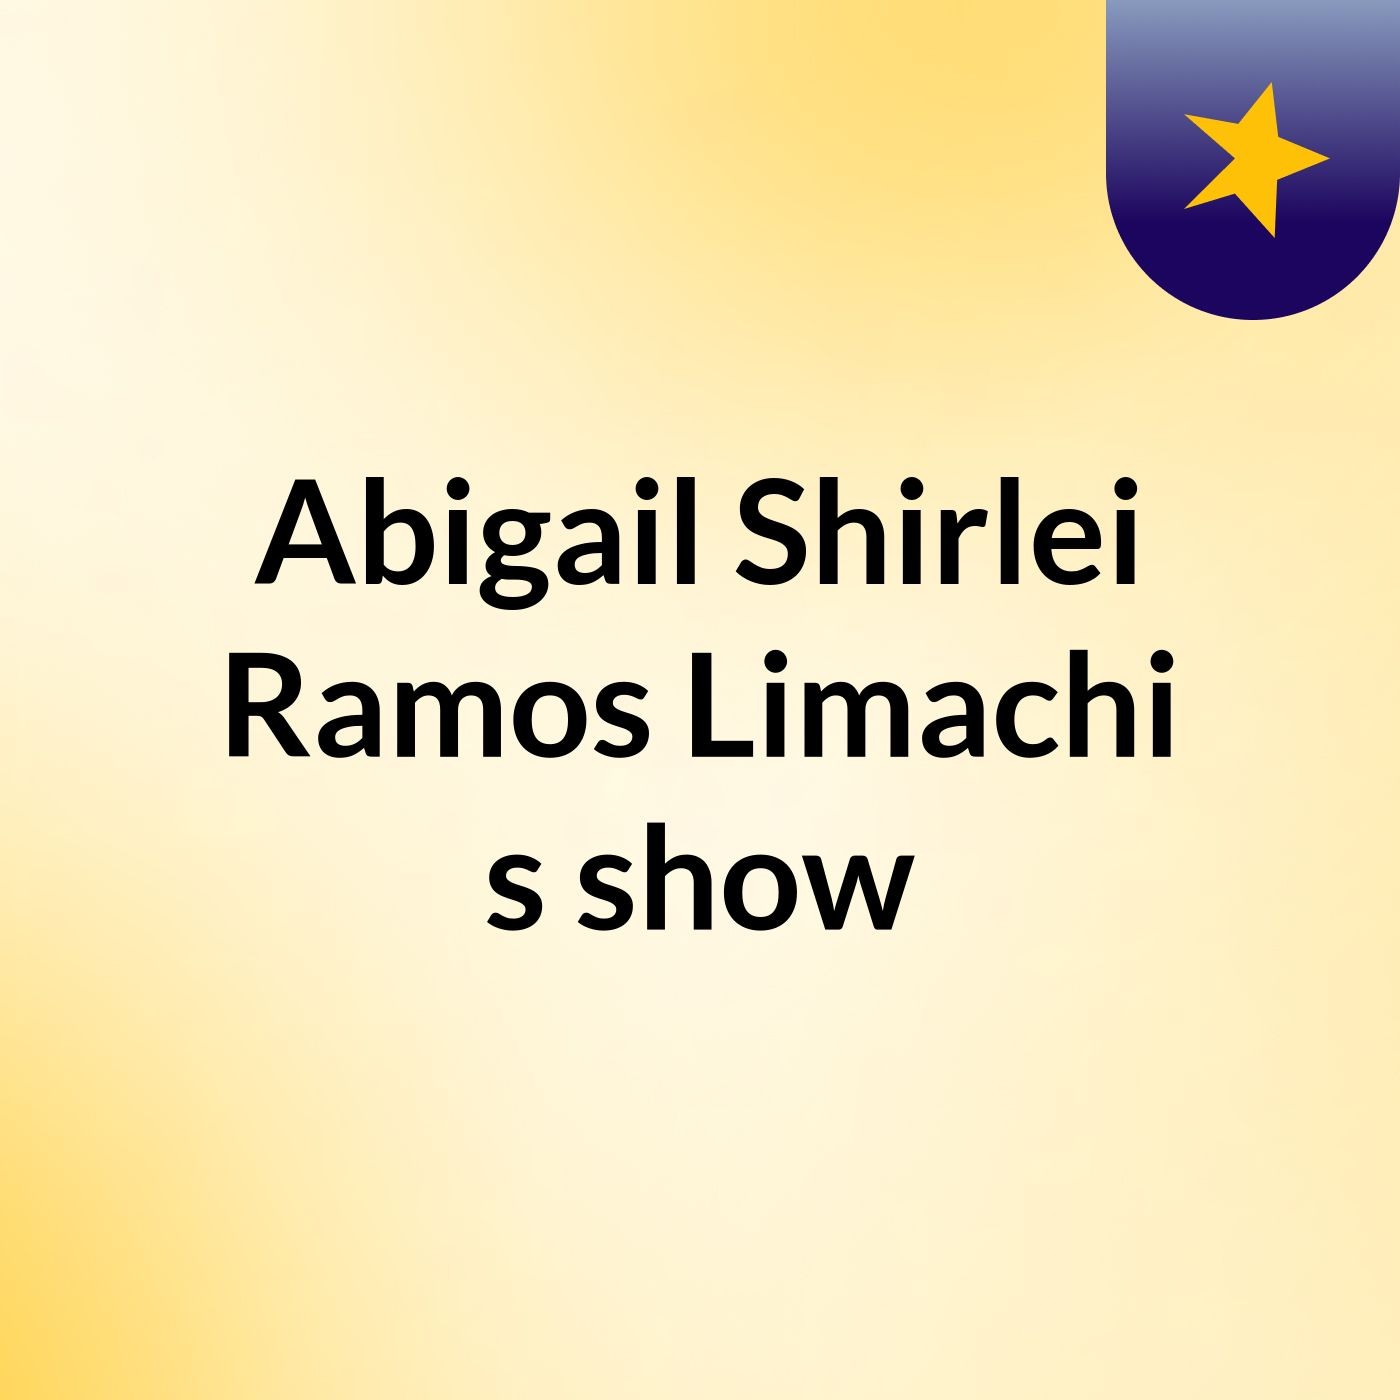 Abigail Shirlei Ramos Limachi's show